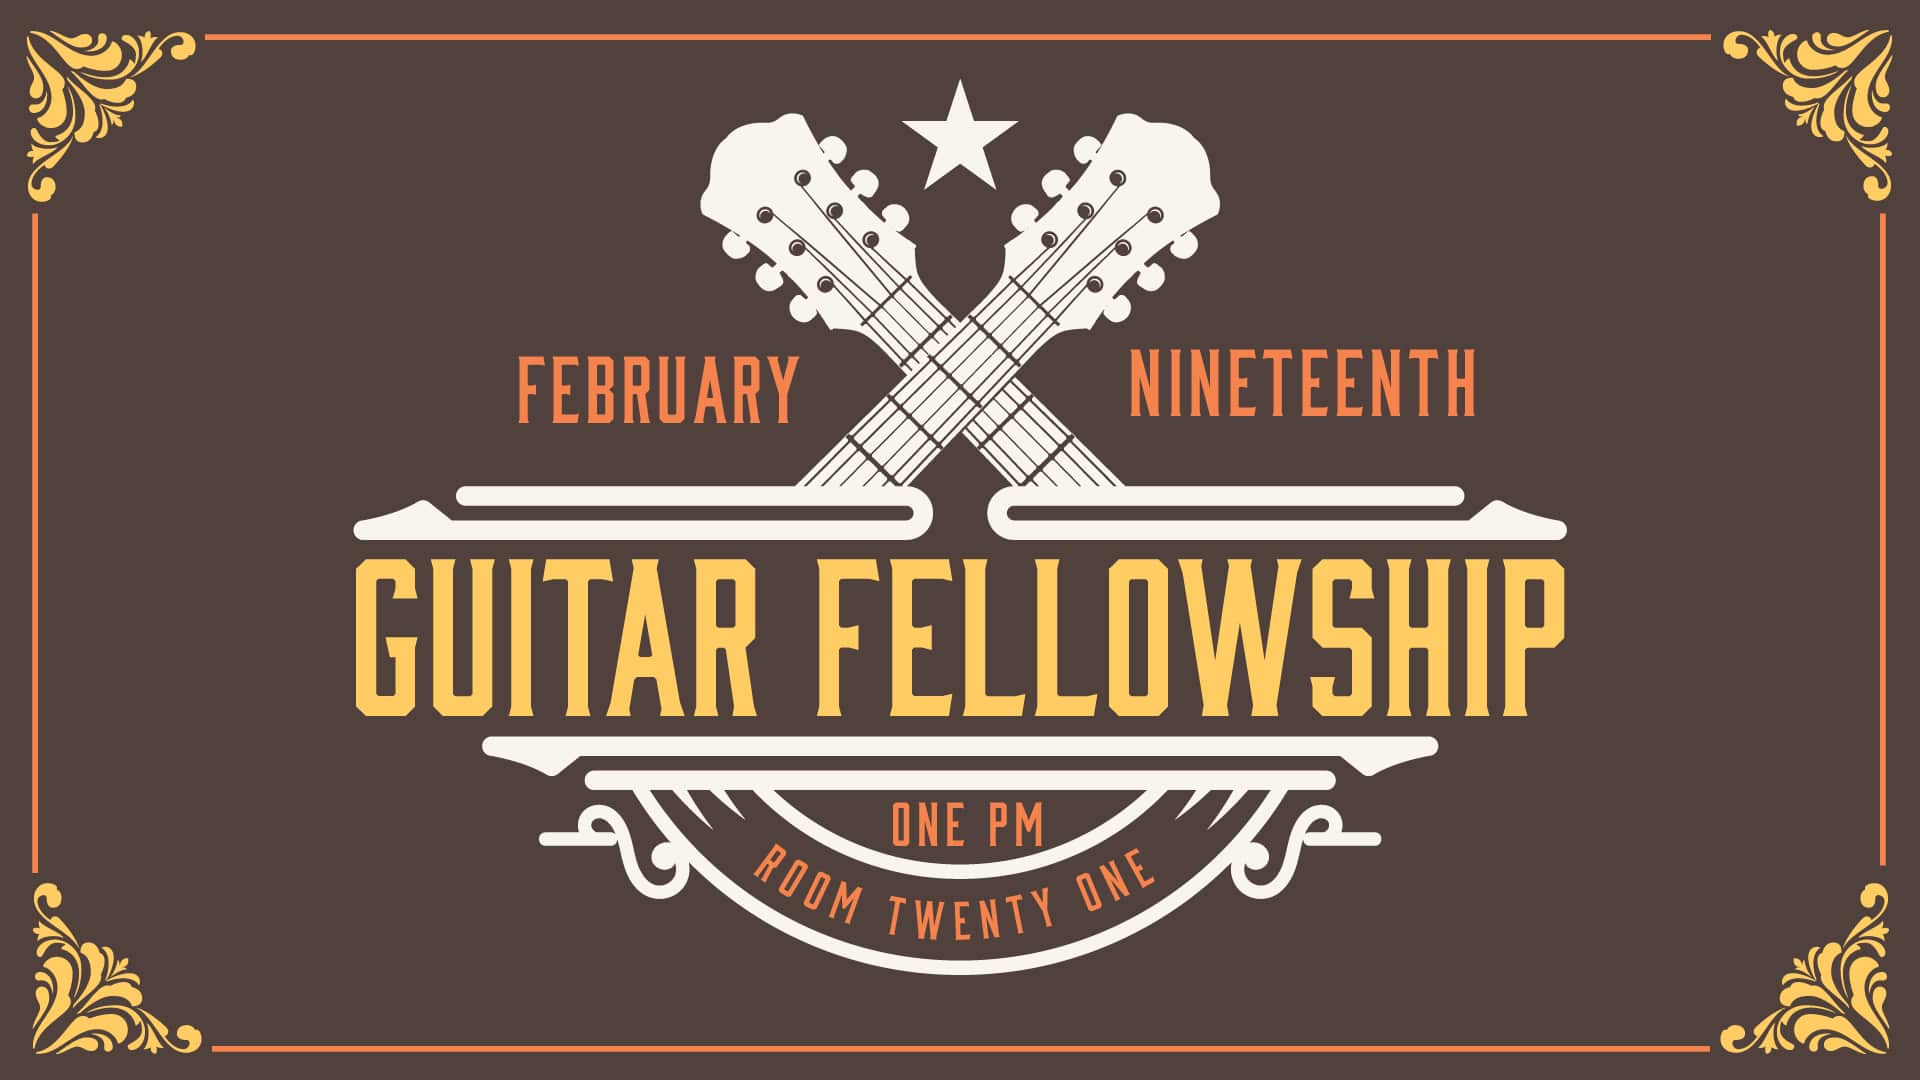 Guitar Fellowship